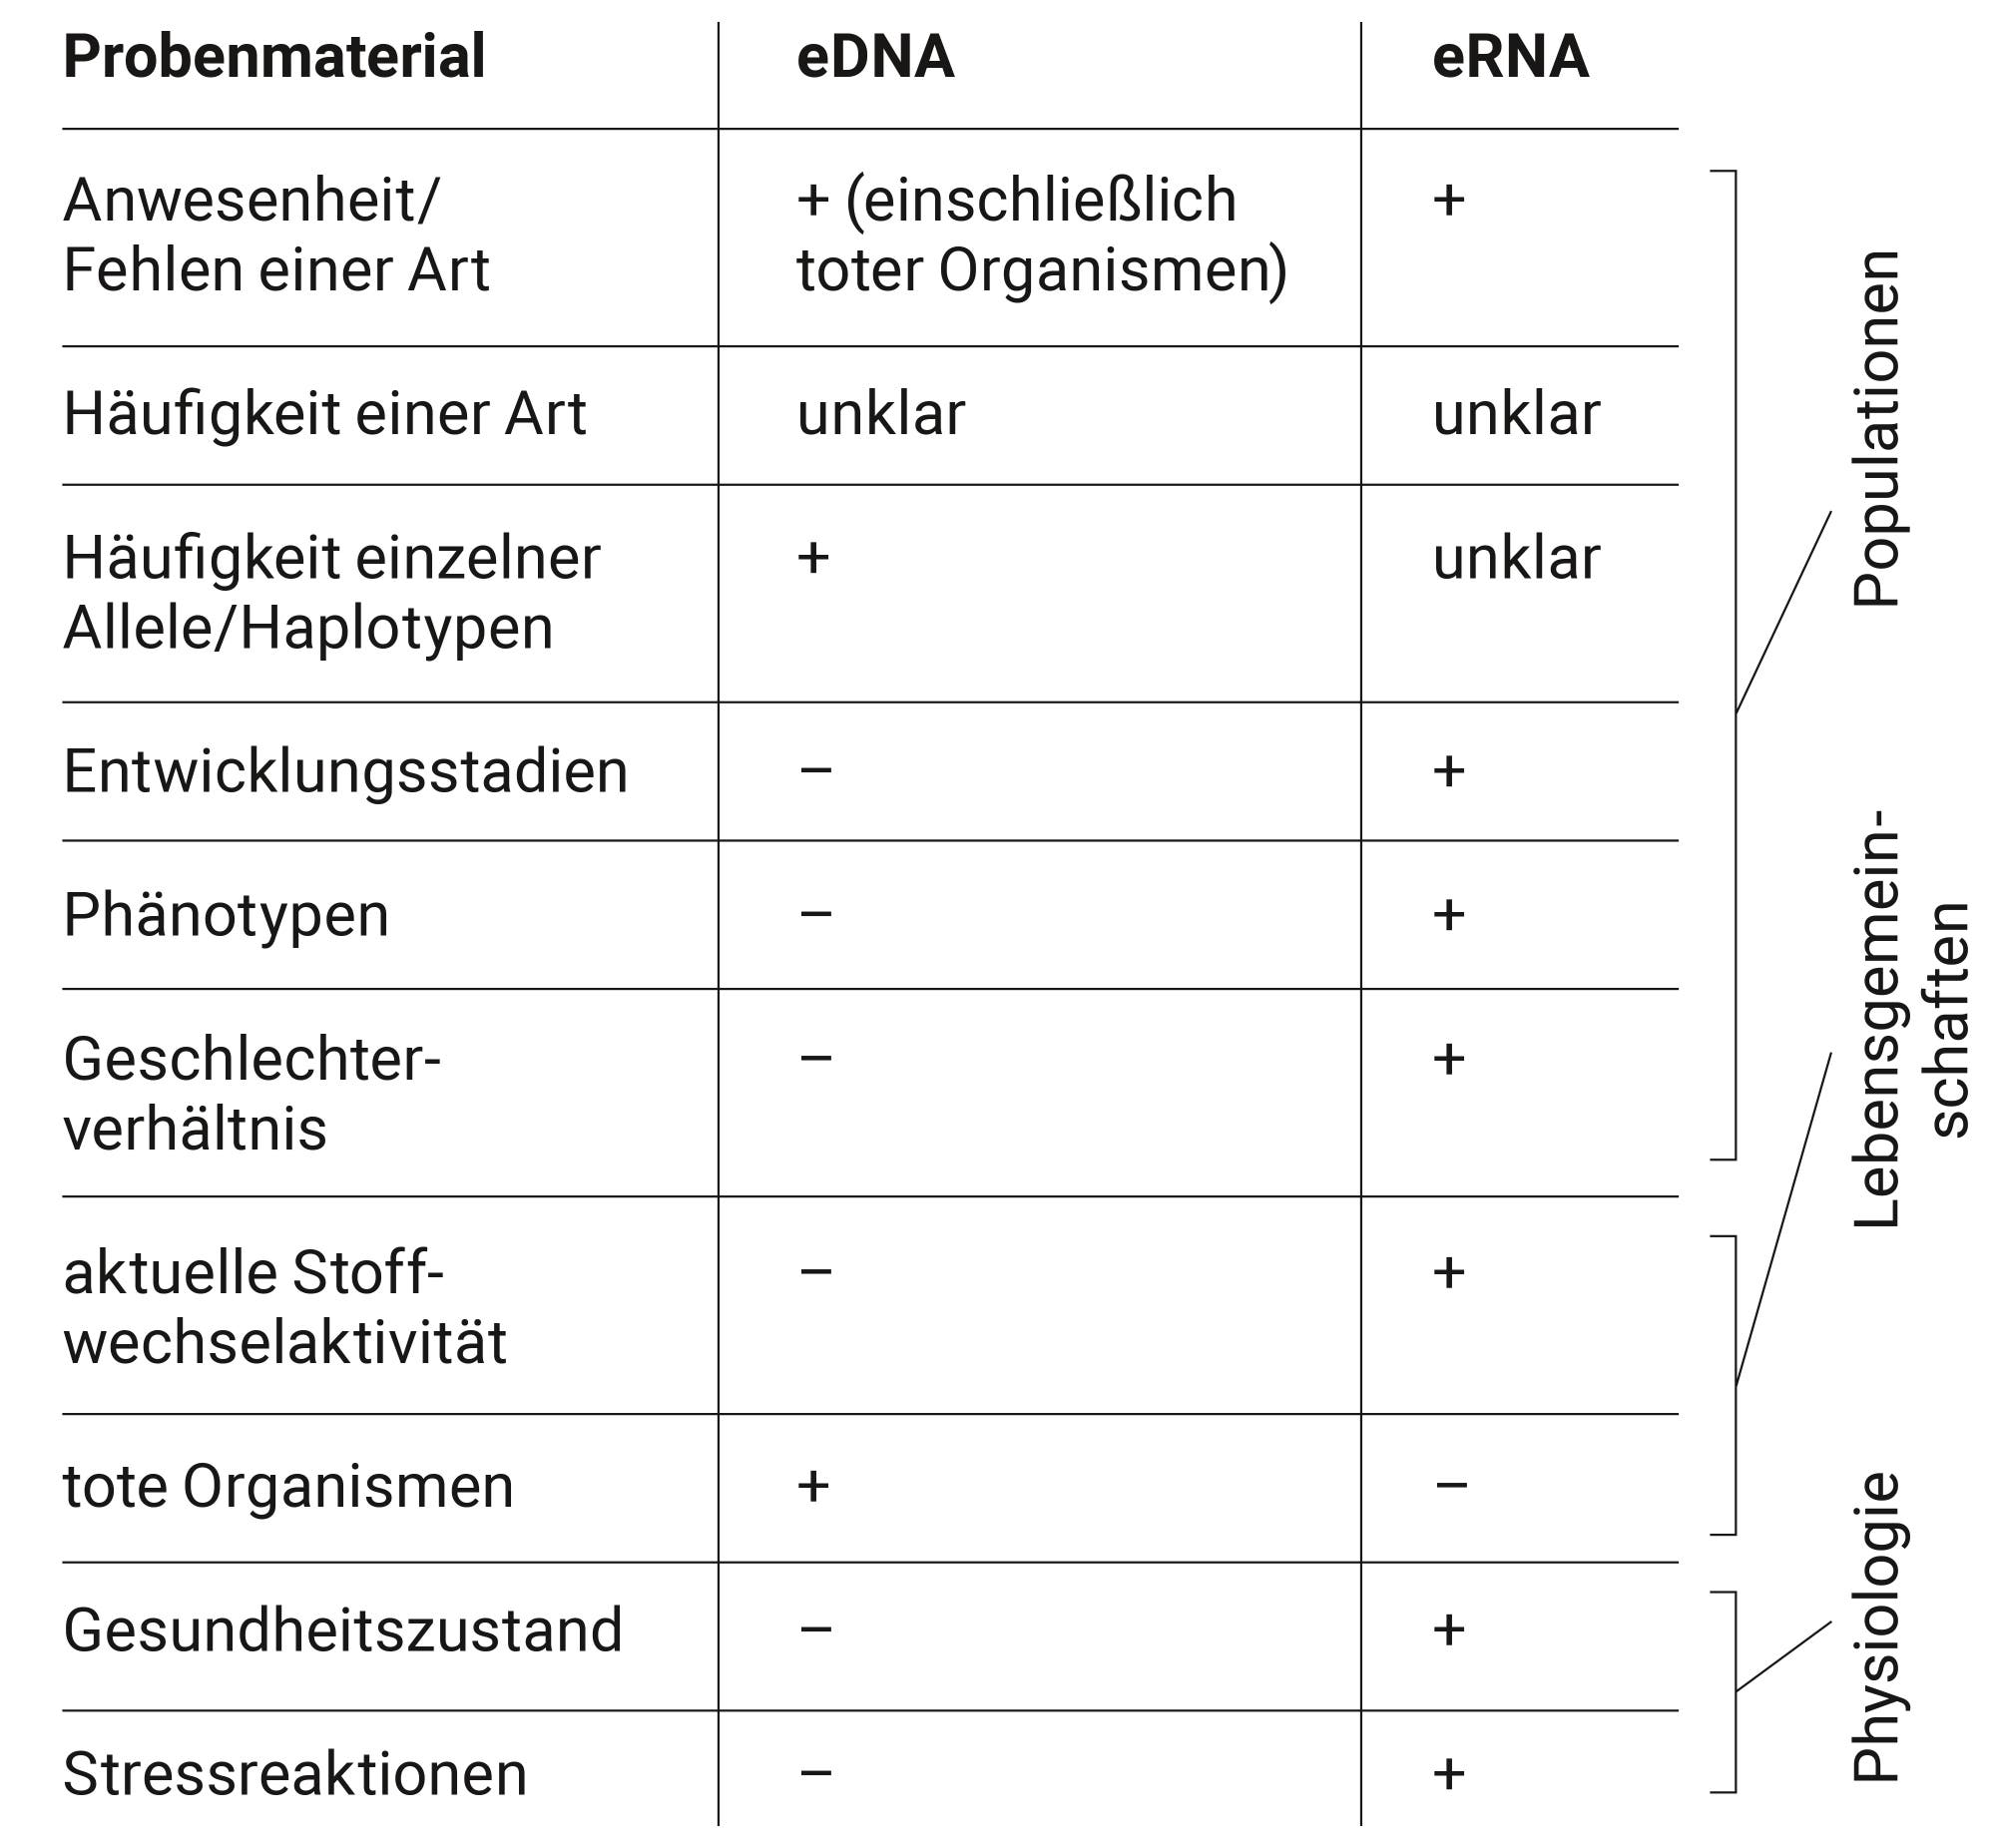 Tabelle eDNA versus eRNA